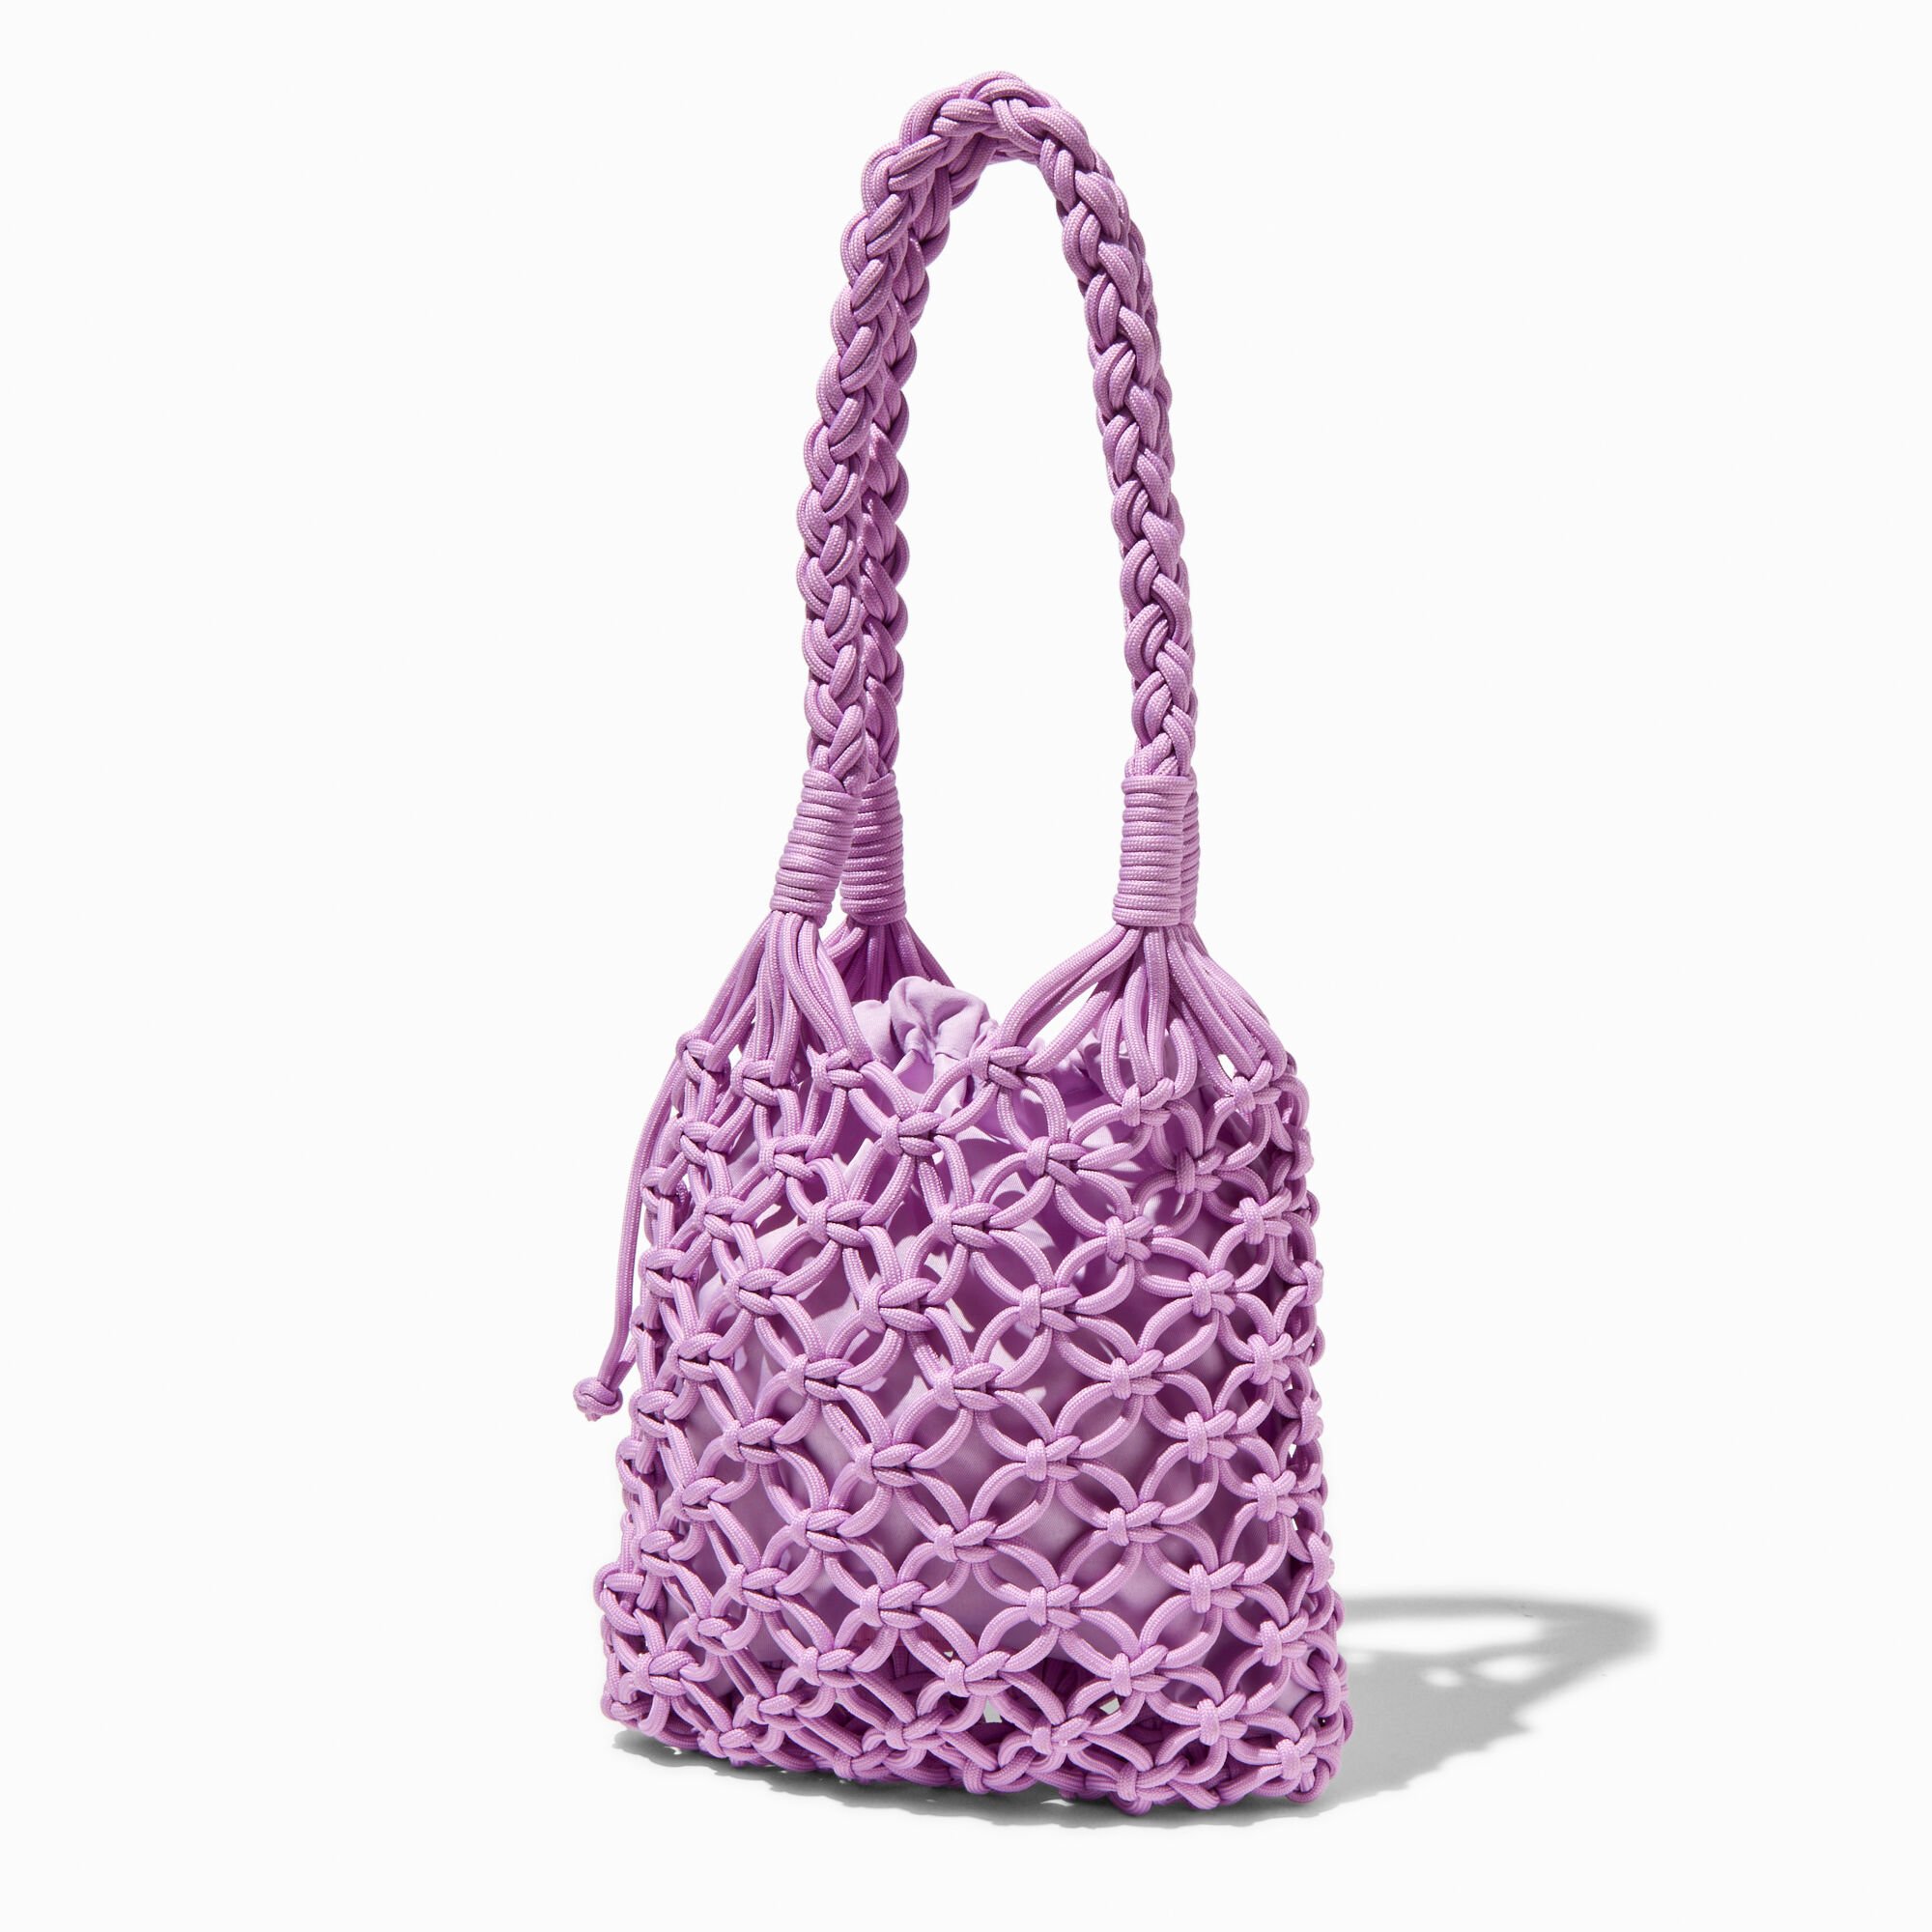 View Claires Lavender Crochet Shoulder Bag information